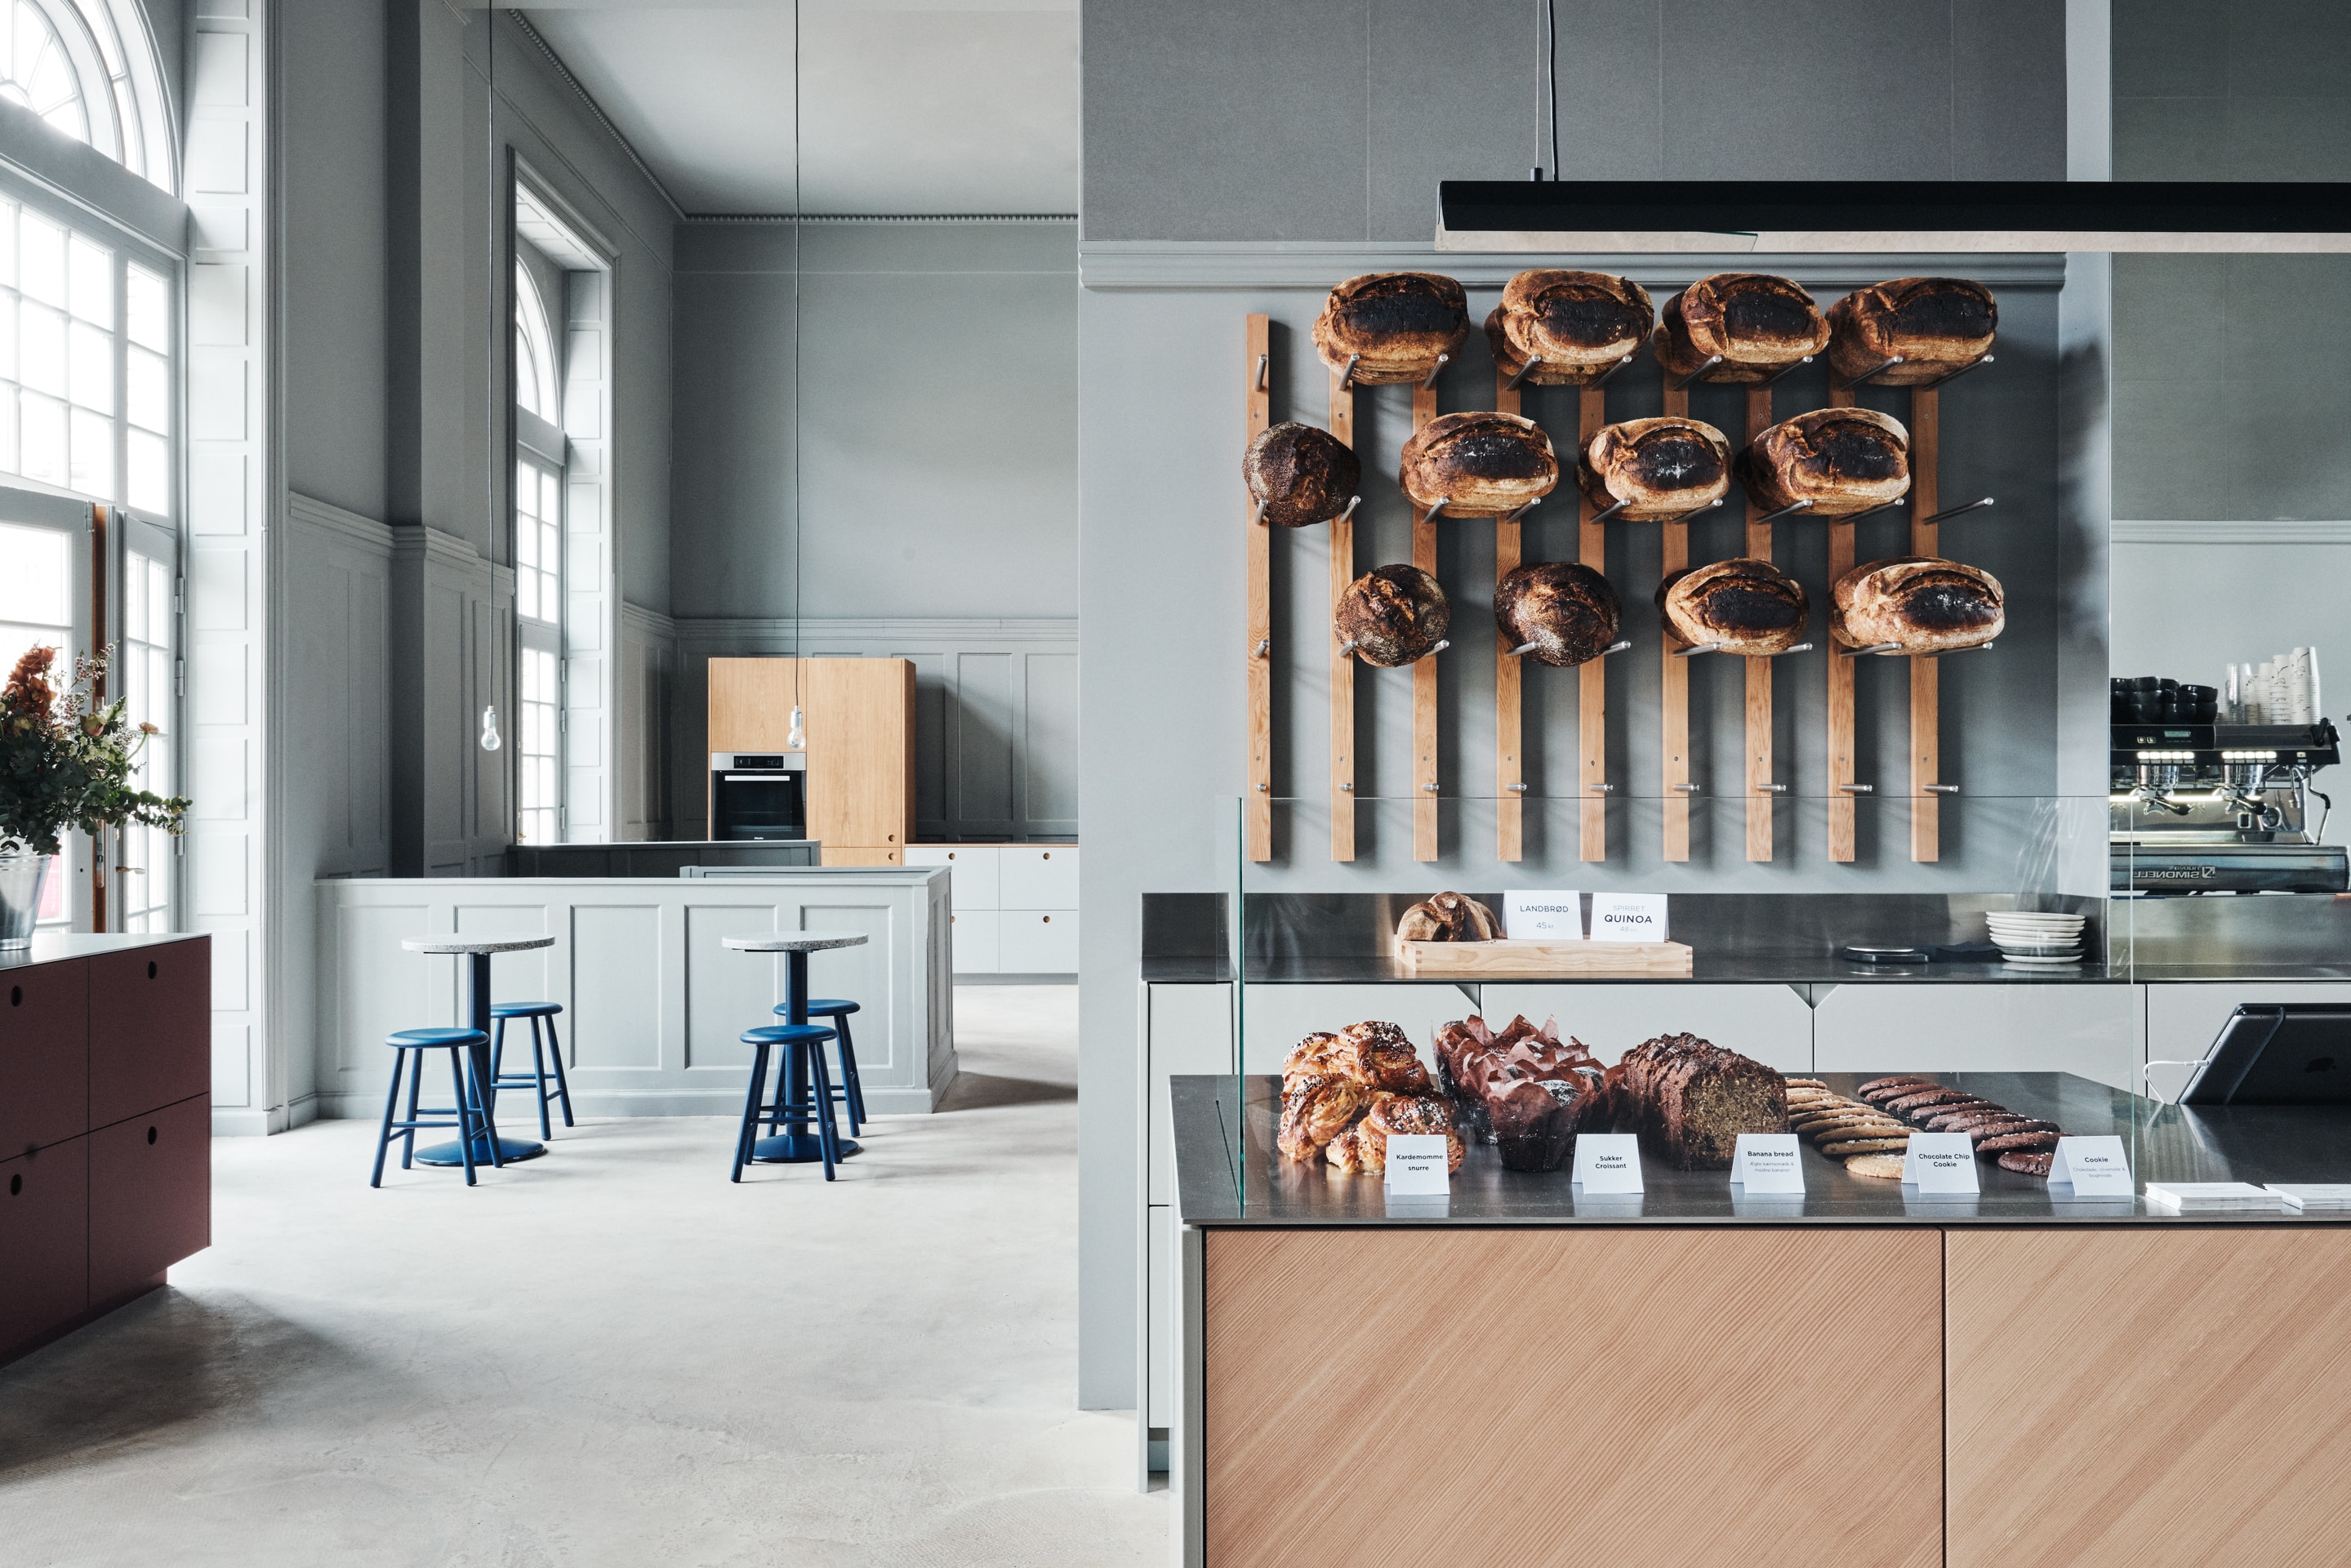 Stunning new kitchen showroom by Reform